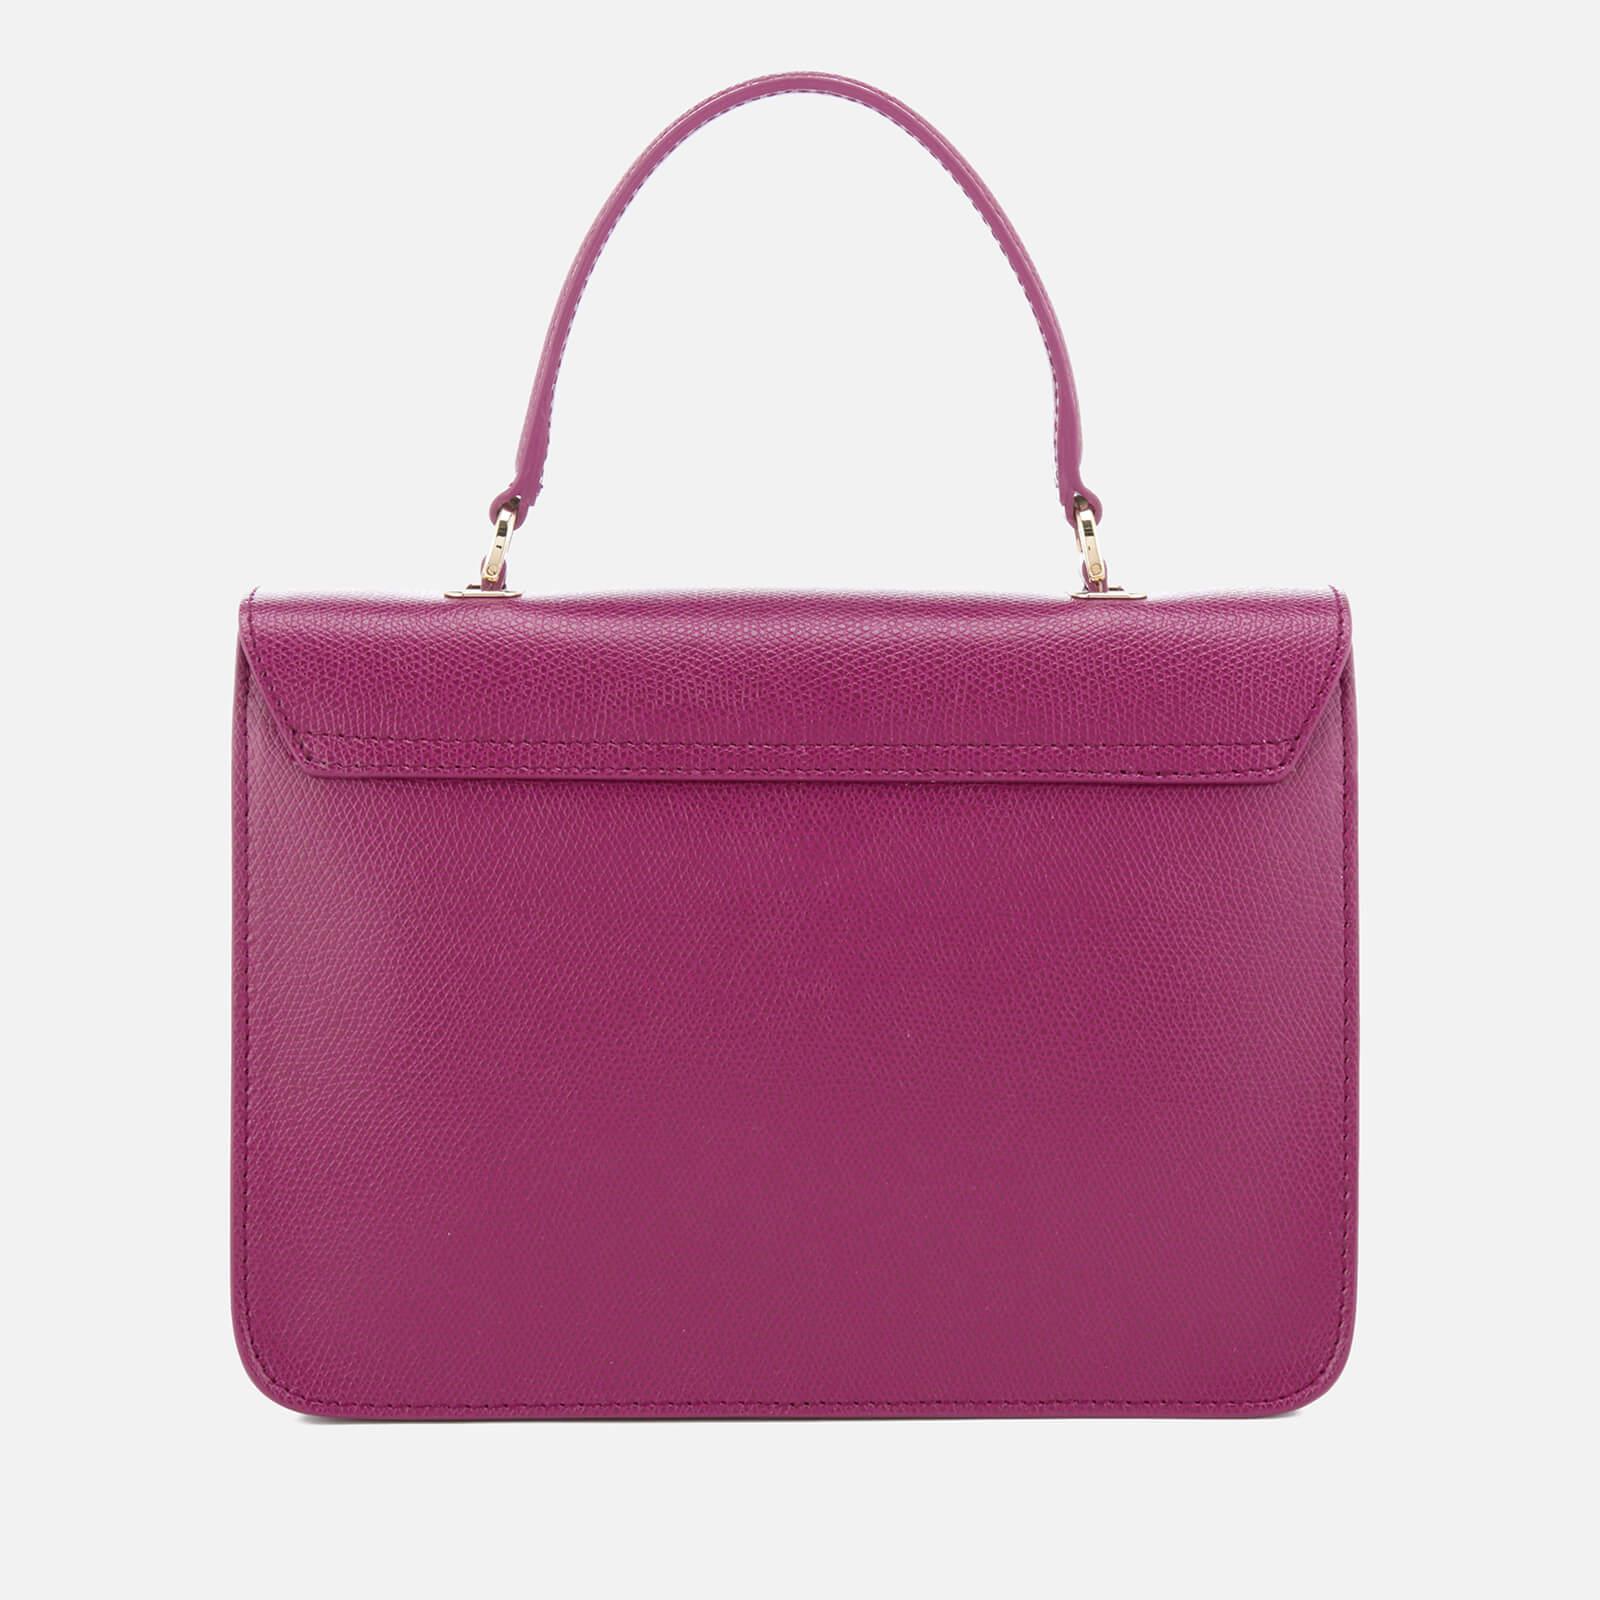 Lyst - Furla Metropolis Small Top Handle Bag in Purple